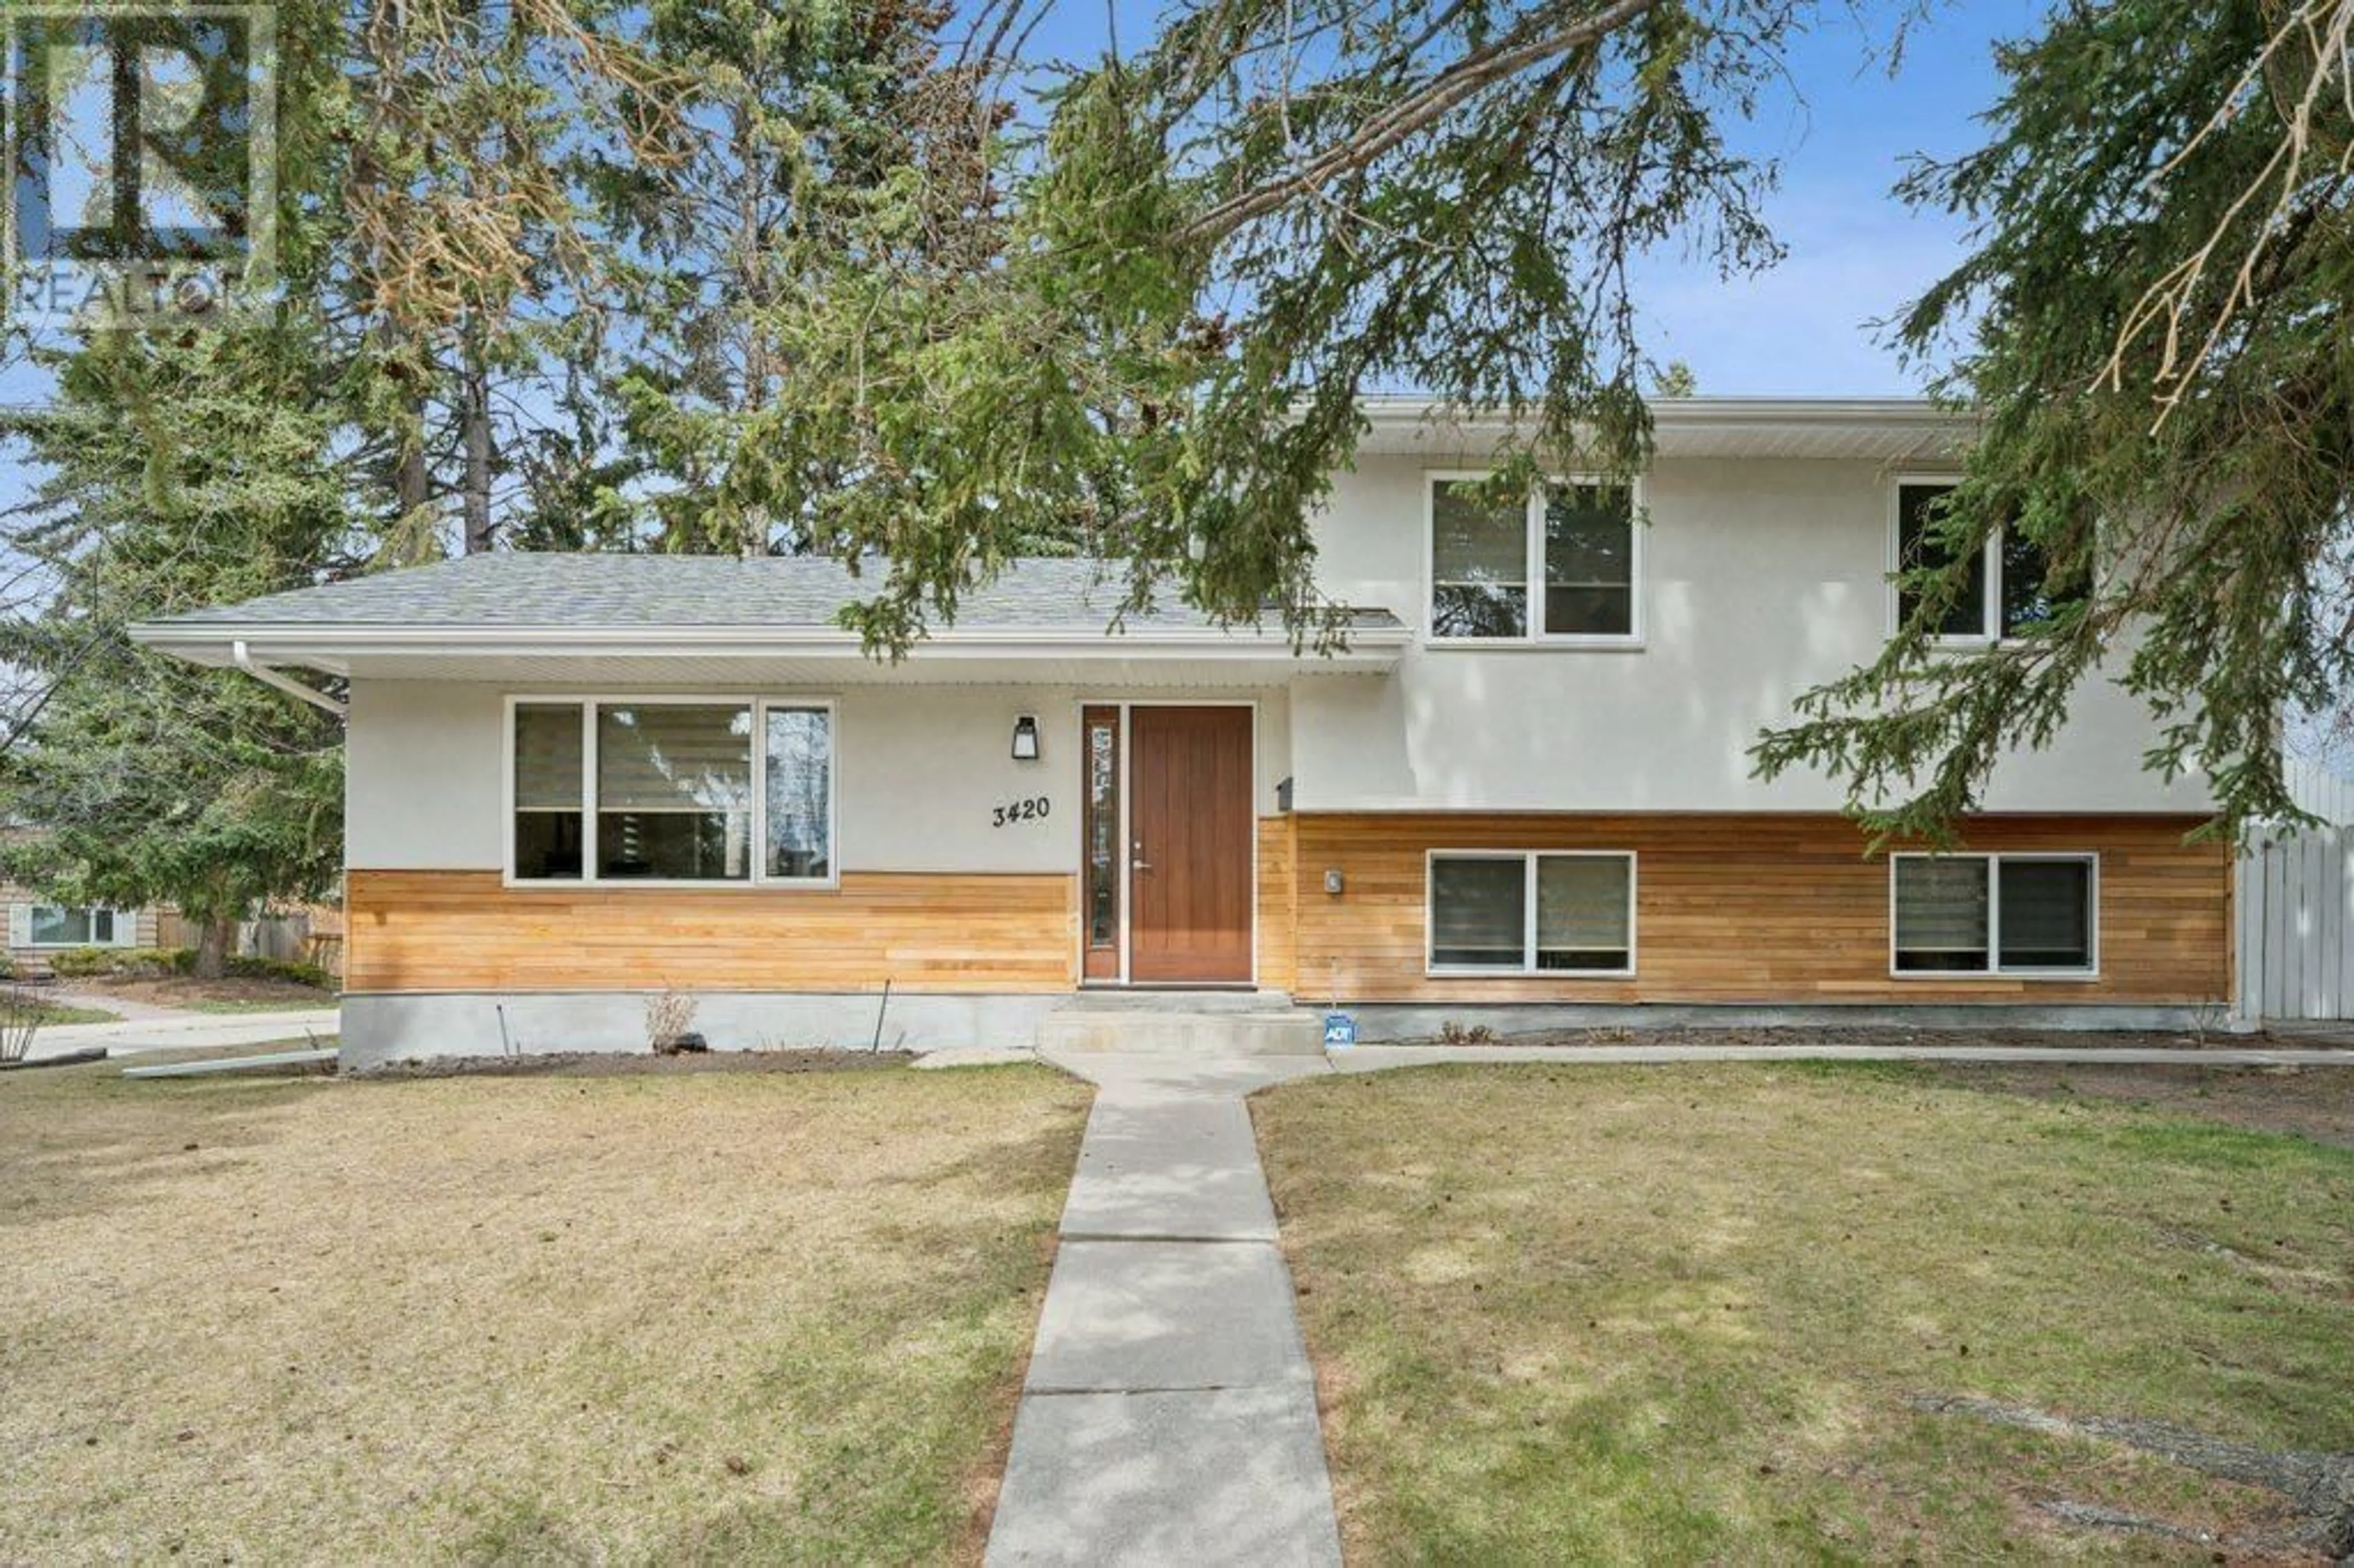 Home with vinyl exterior material for 3420 Utah Drive NW, Calgary Alberta T2N4A4